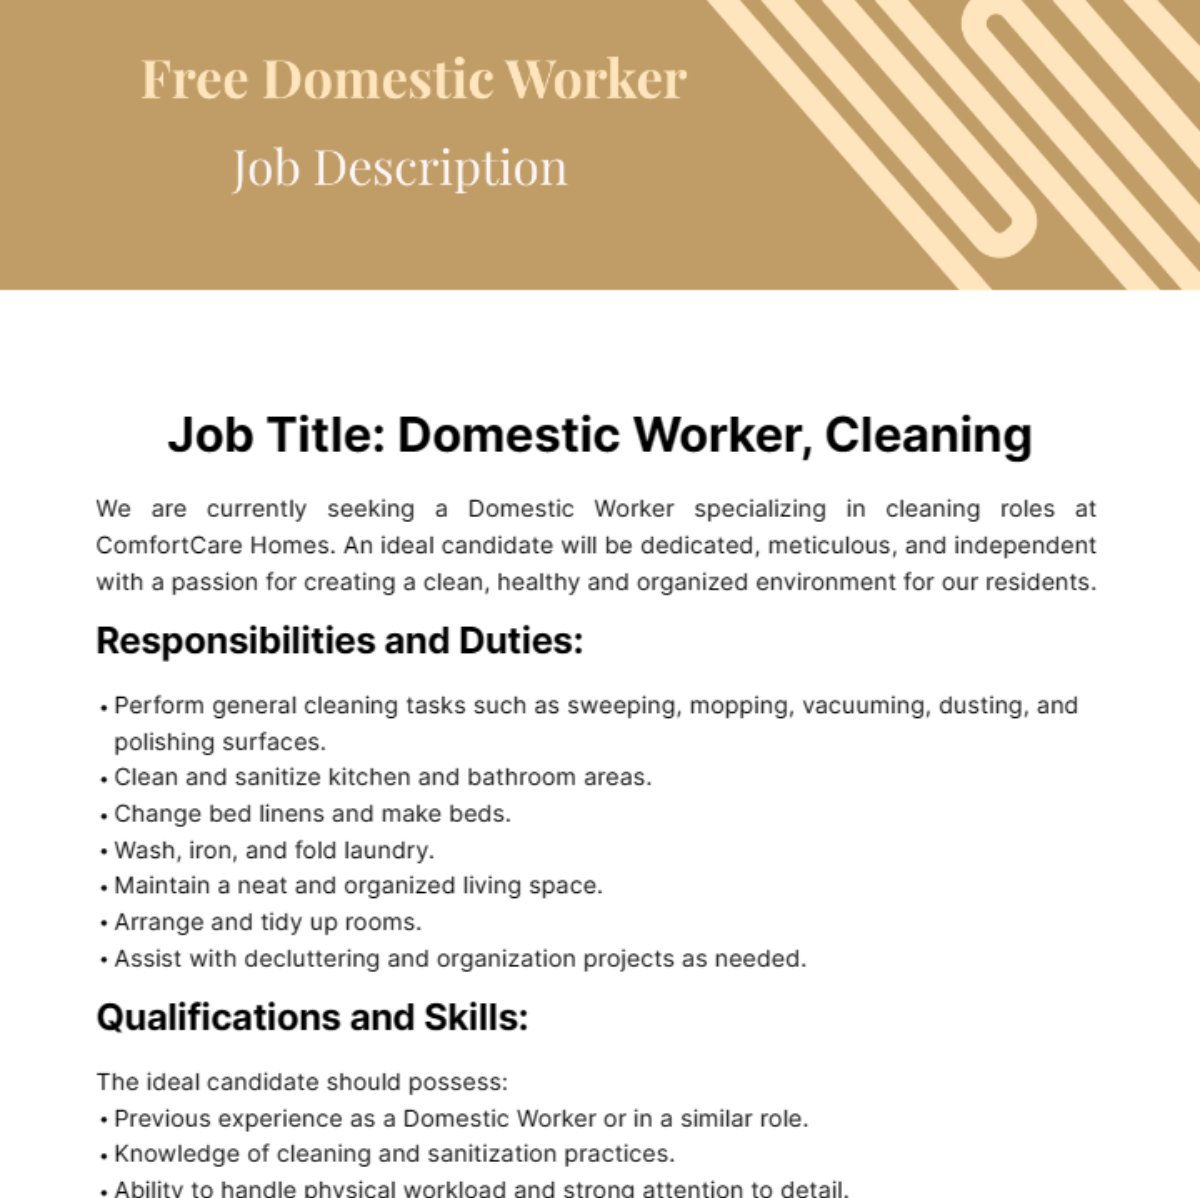 Free Domestic Worker Job Description Template